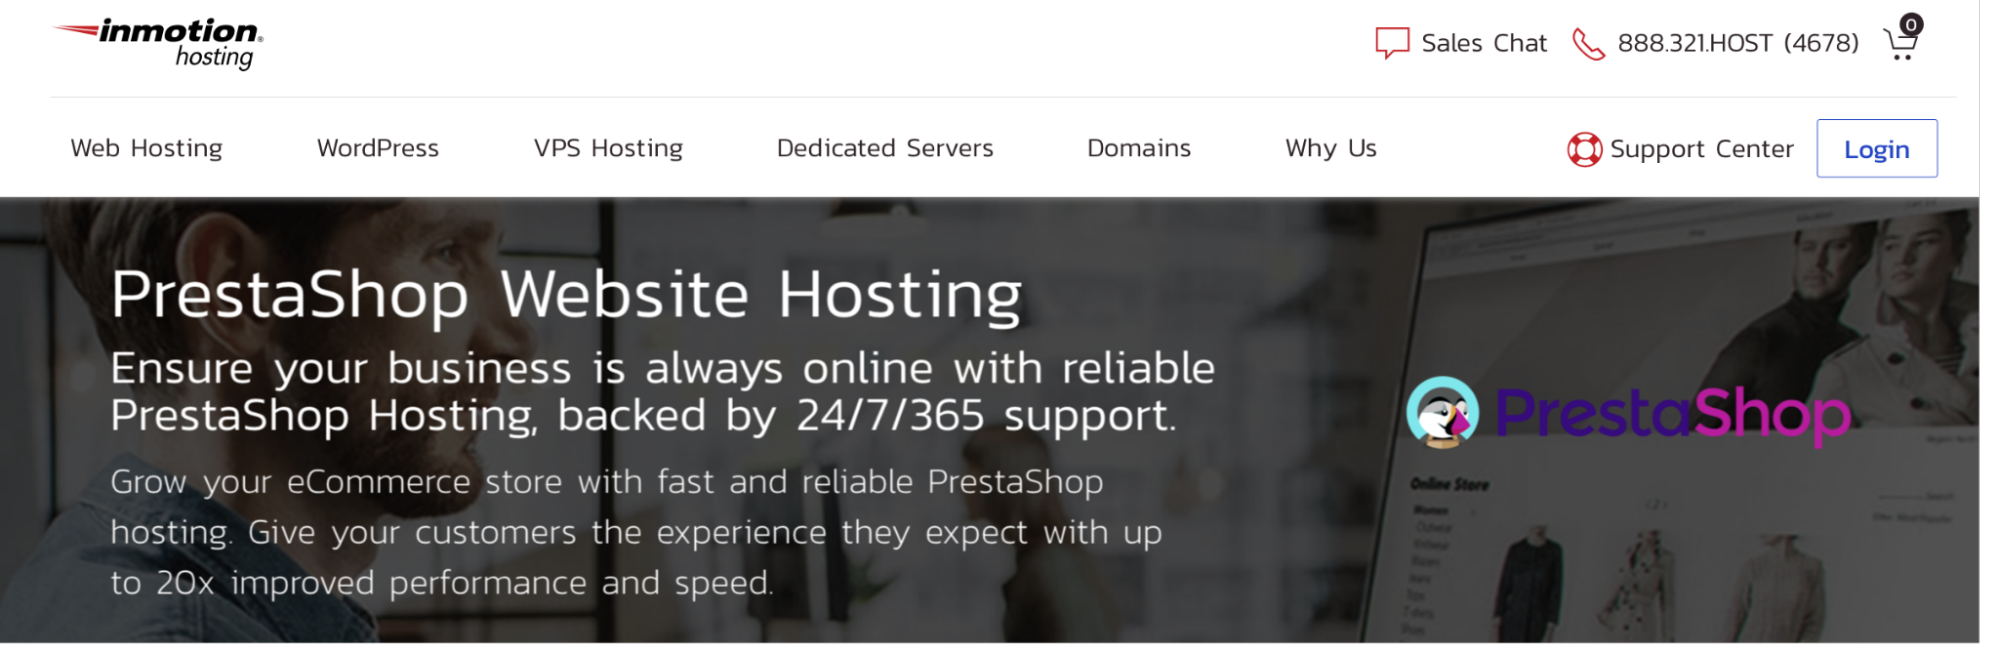 InMotion Hosting Pretashop Landing Page